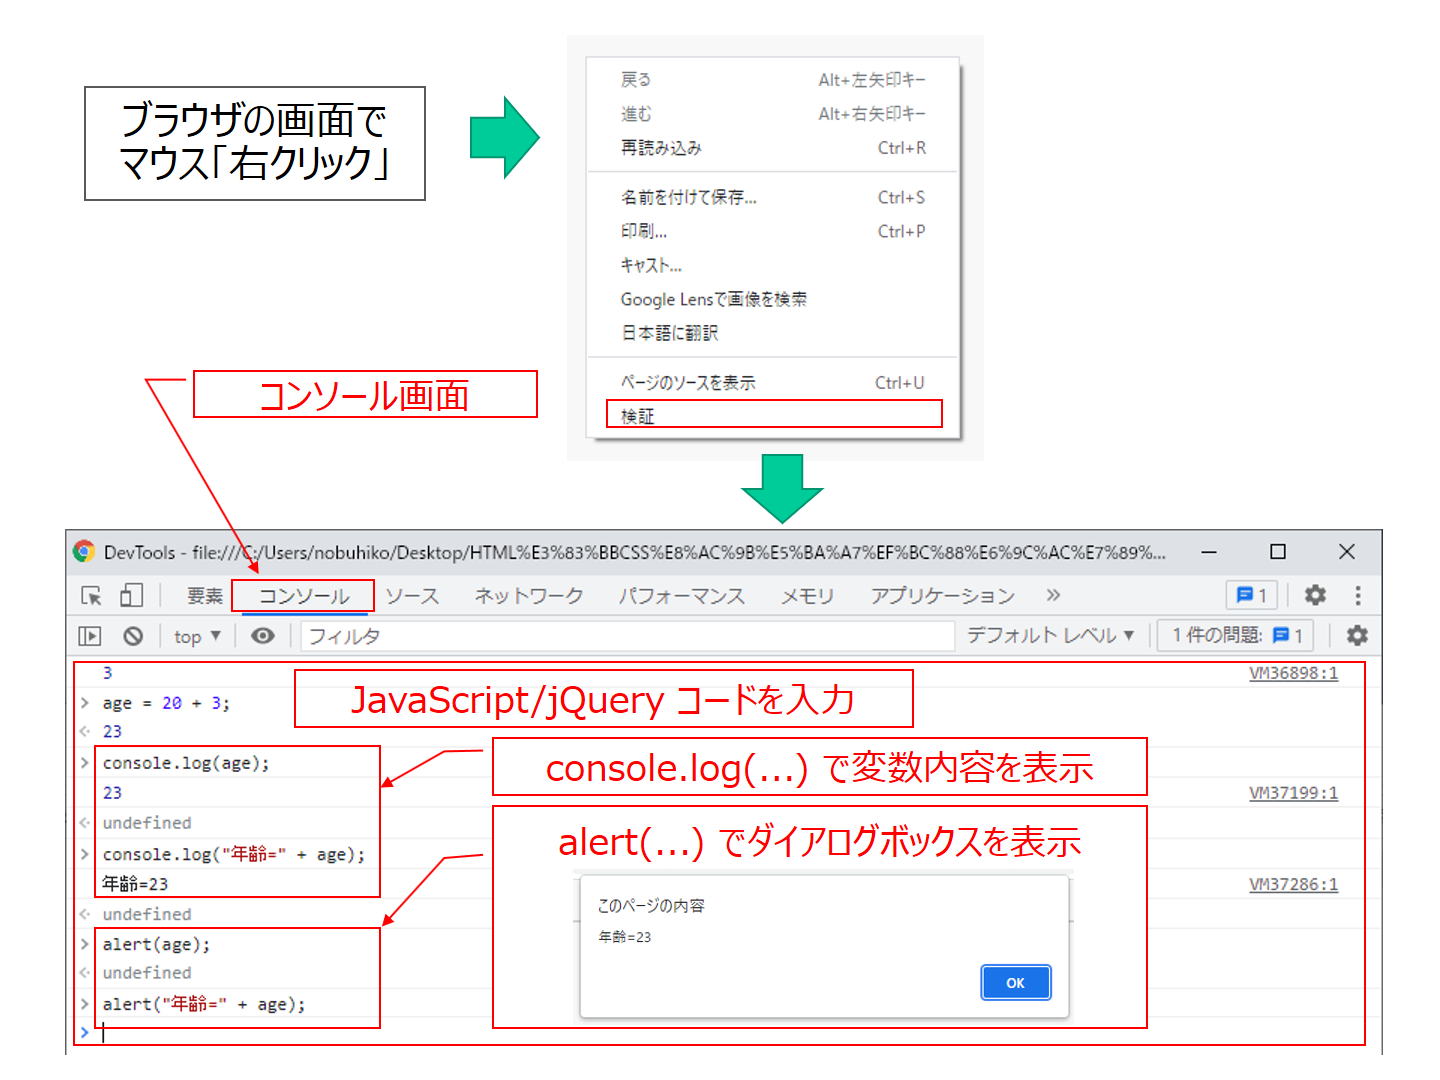 JavaScript/jQuery の動作確認